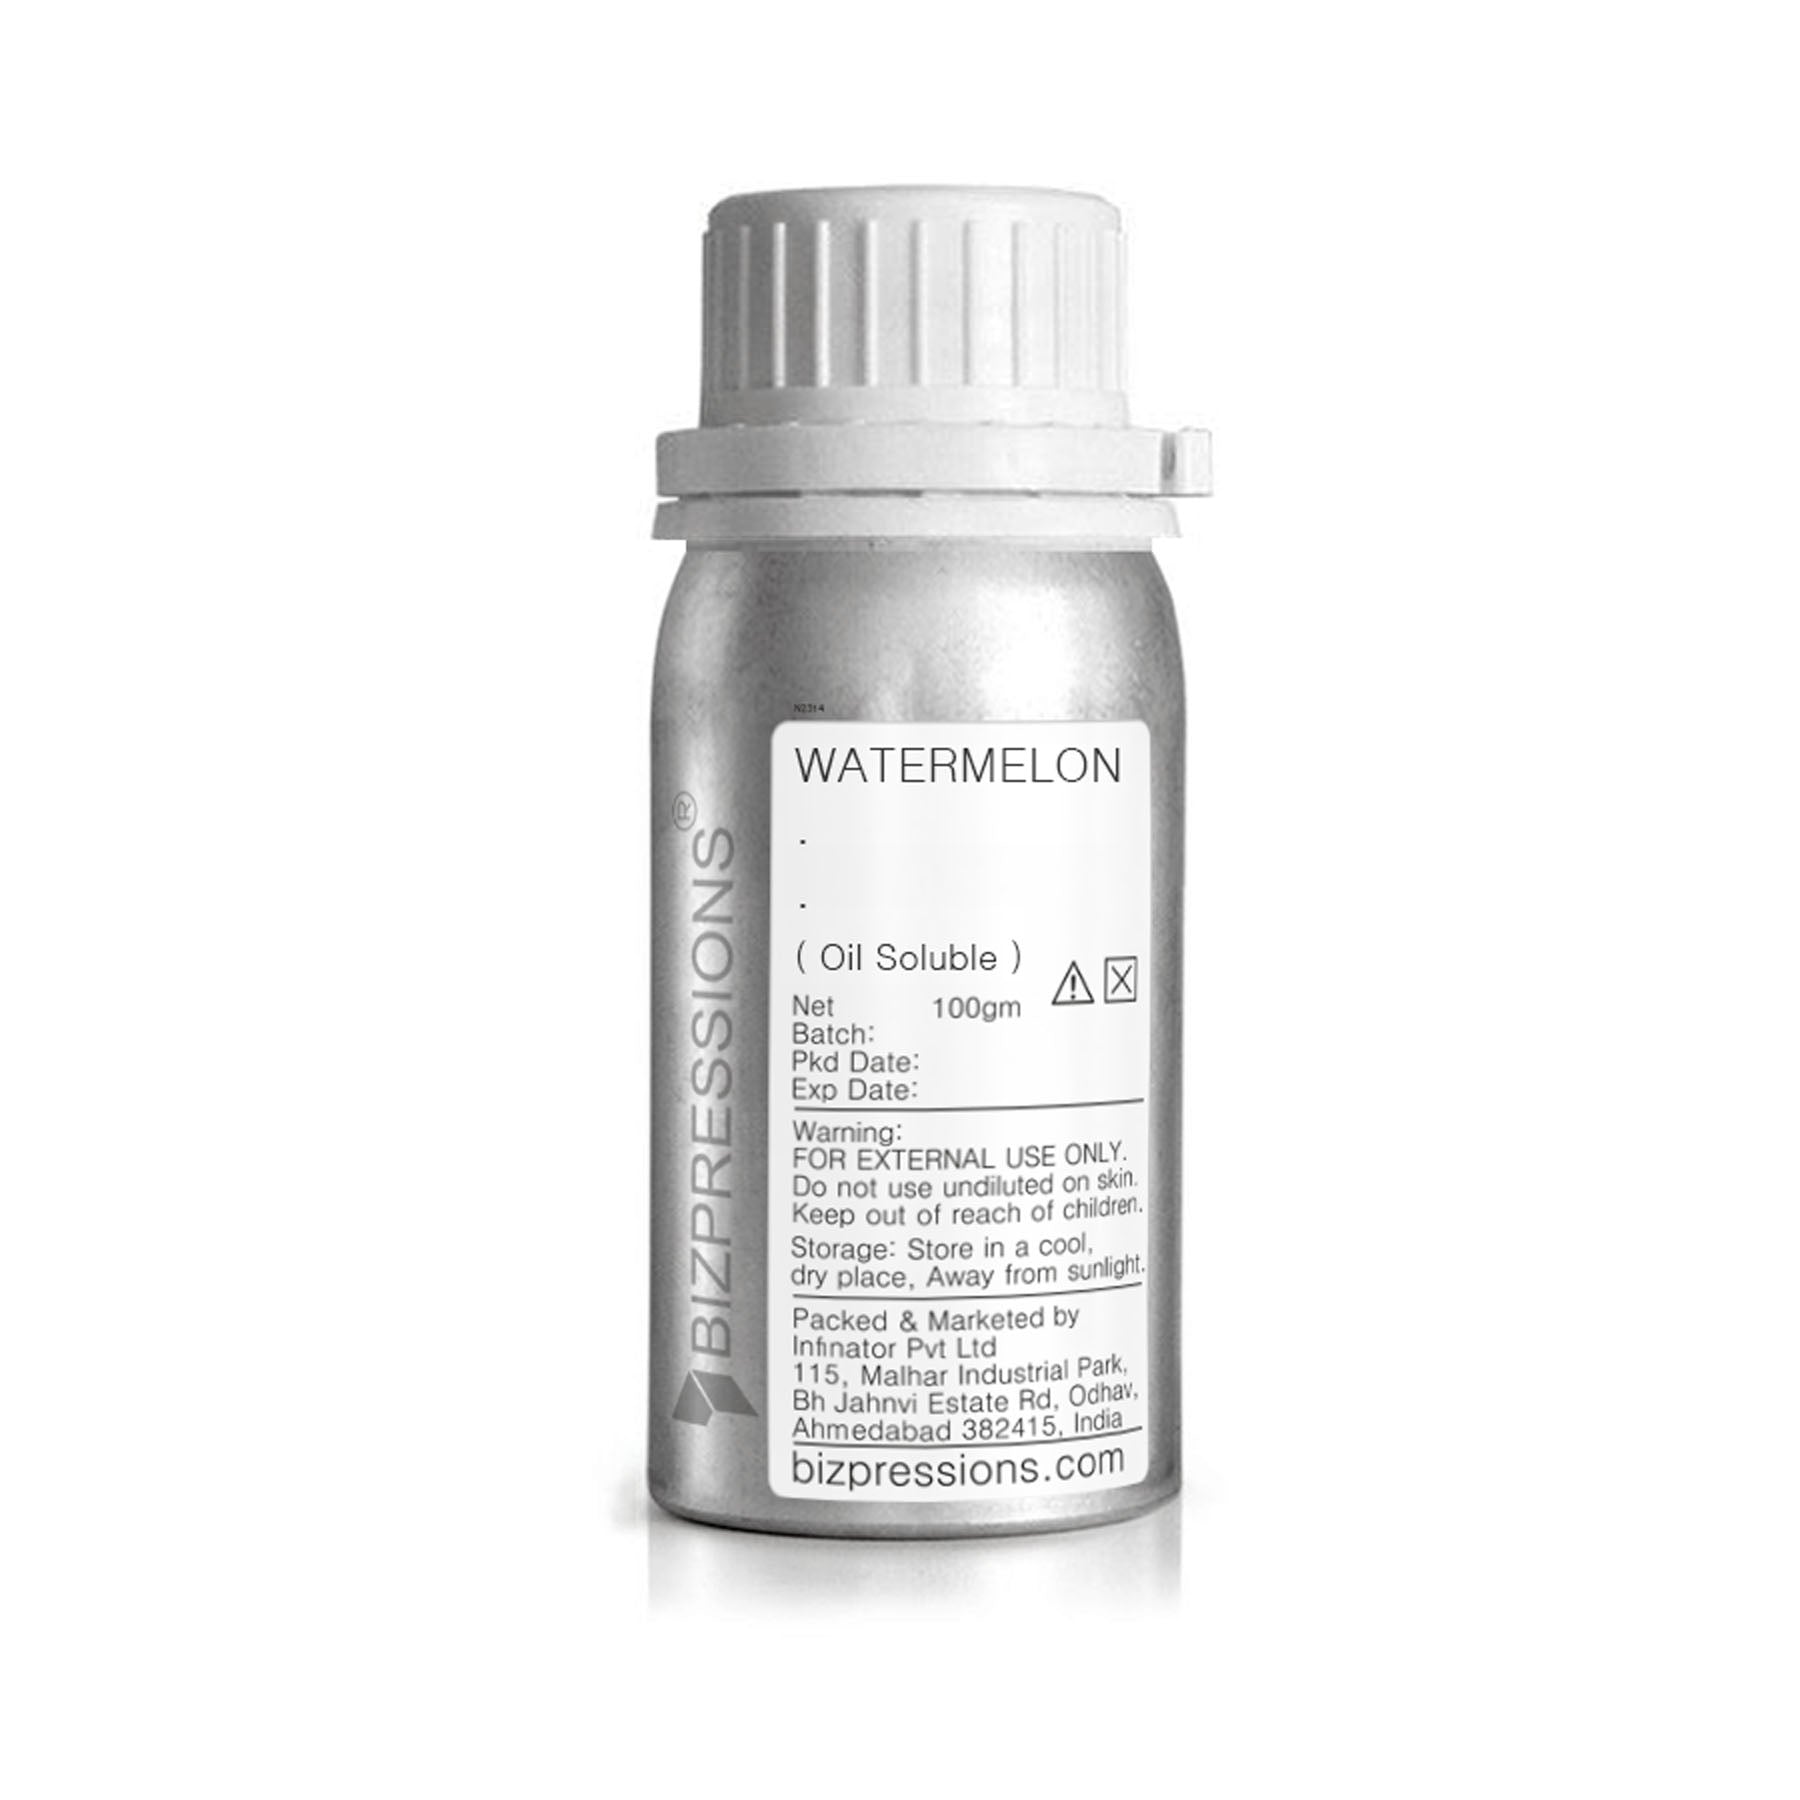 WATERMELON - Fragrance ( Oil Soluble ) - 100 gm